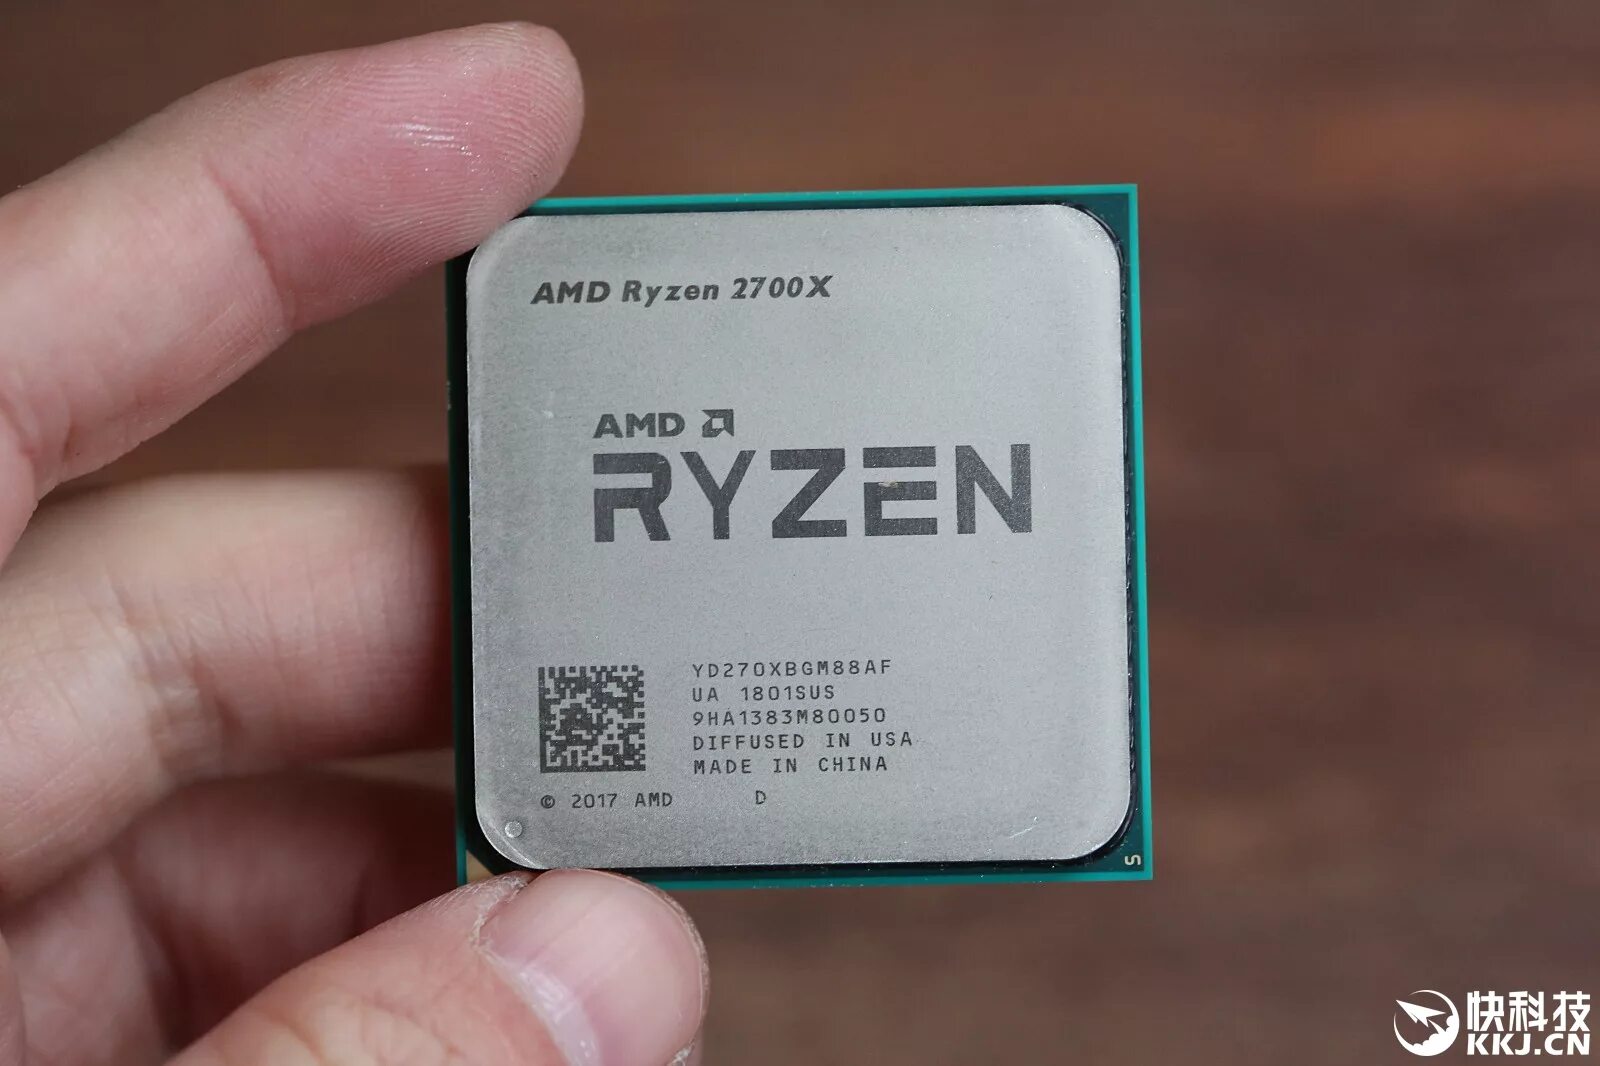 Ryzen 7 2700 купить. R7 2700x. AMD Ryzen 7 2700x. Процессоры АМД 7 2700 Pro. AMD Ryzen 7 2700 eight-Core Processor.